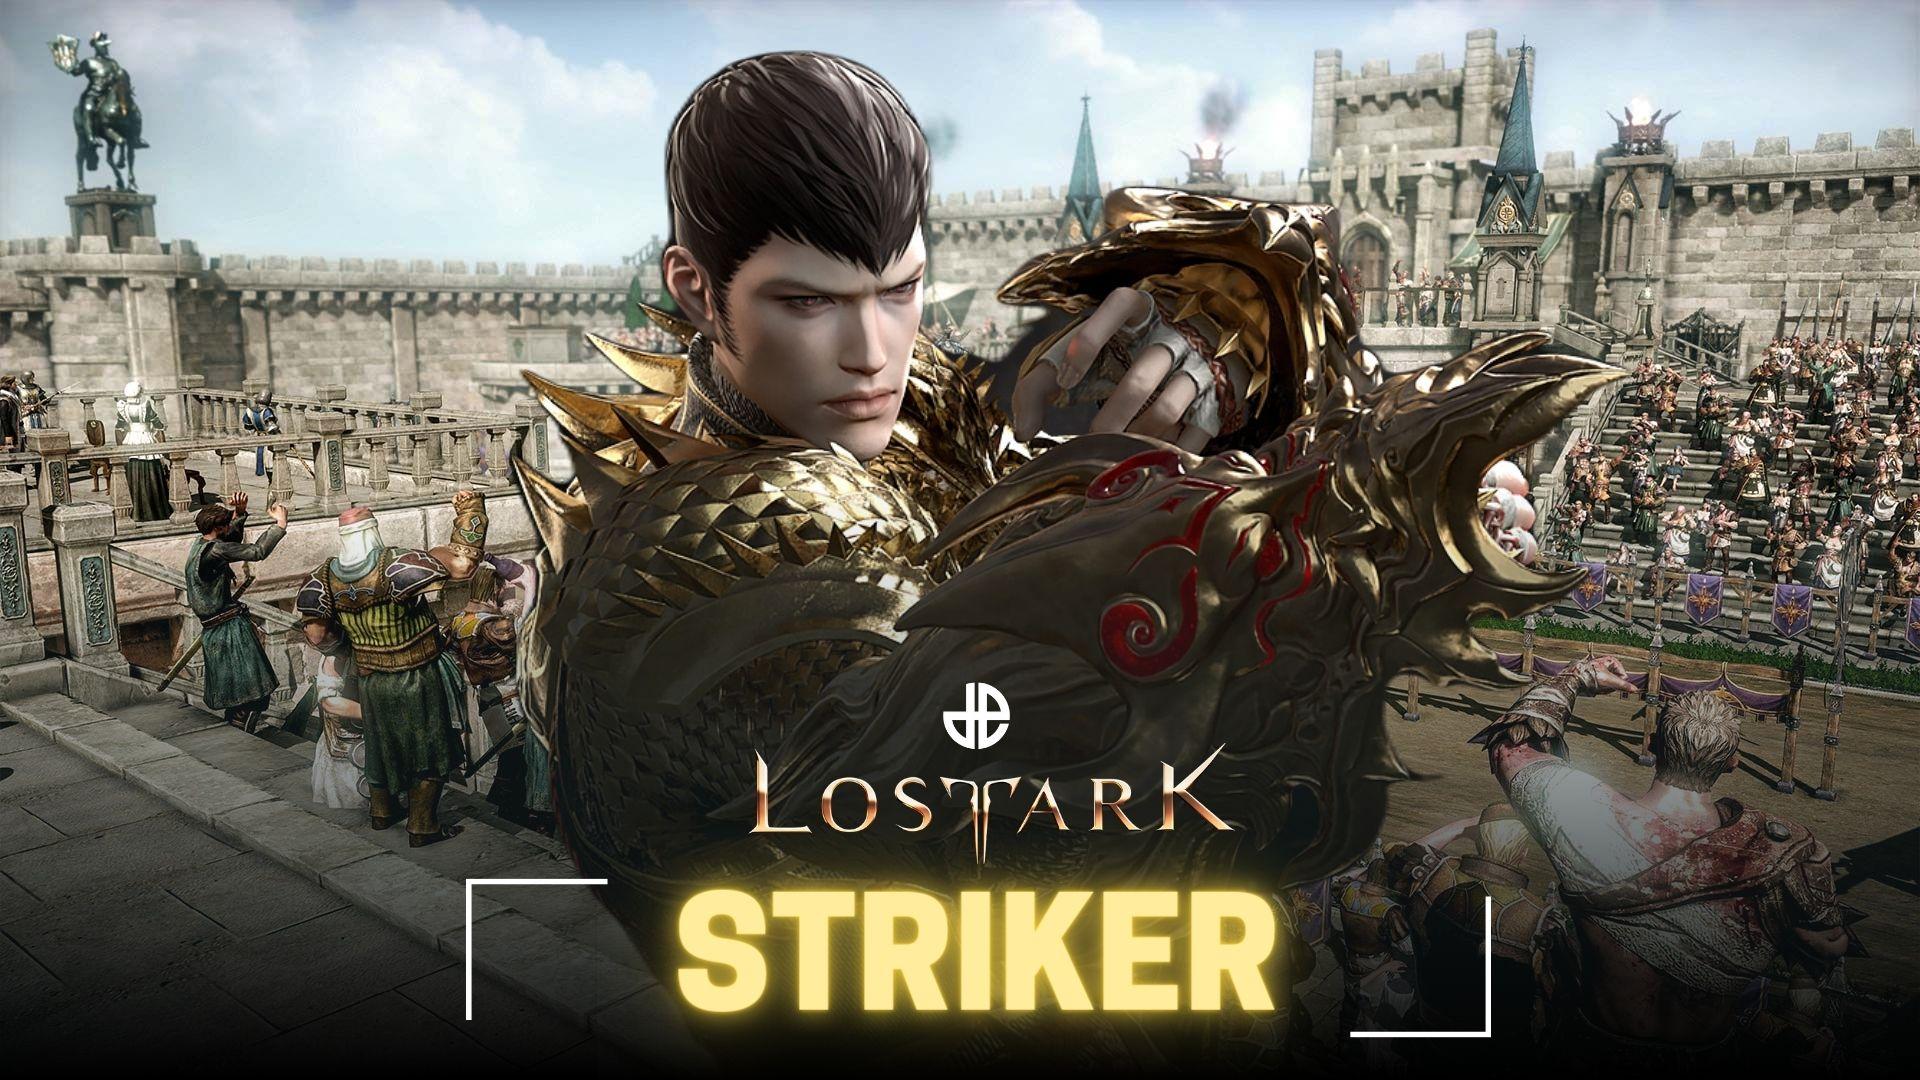 Lost Ark Striker guide: Best skills, build, engravings, and leveling -  Inven Global